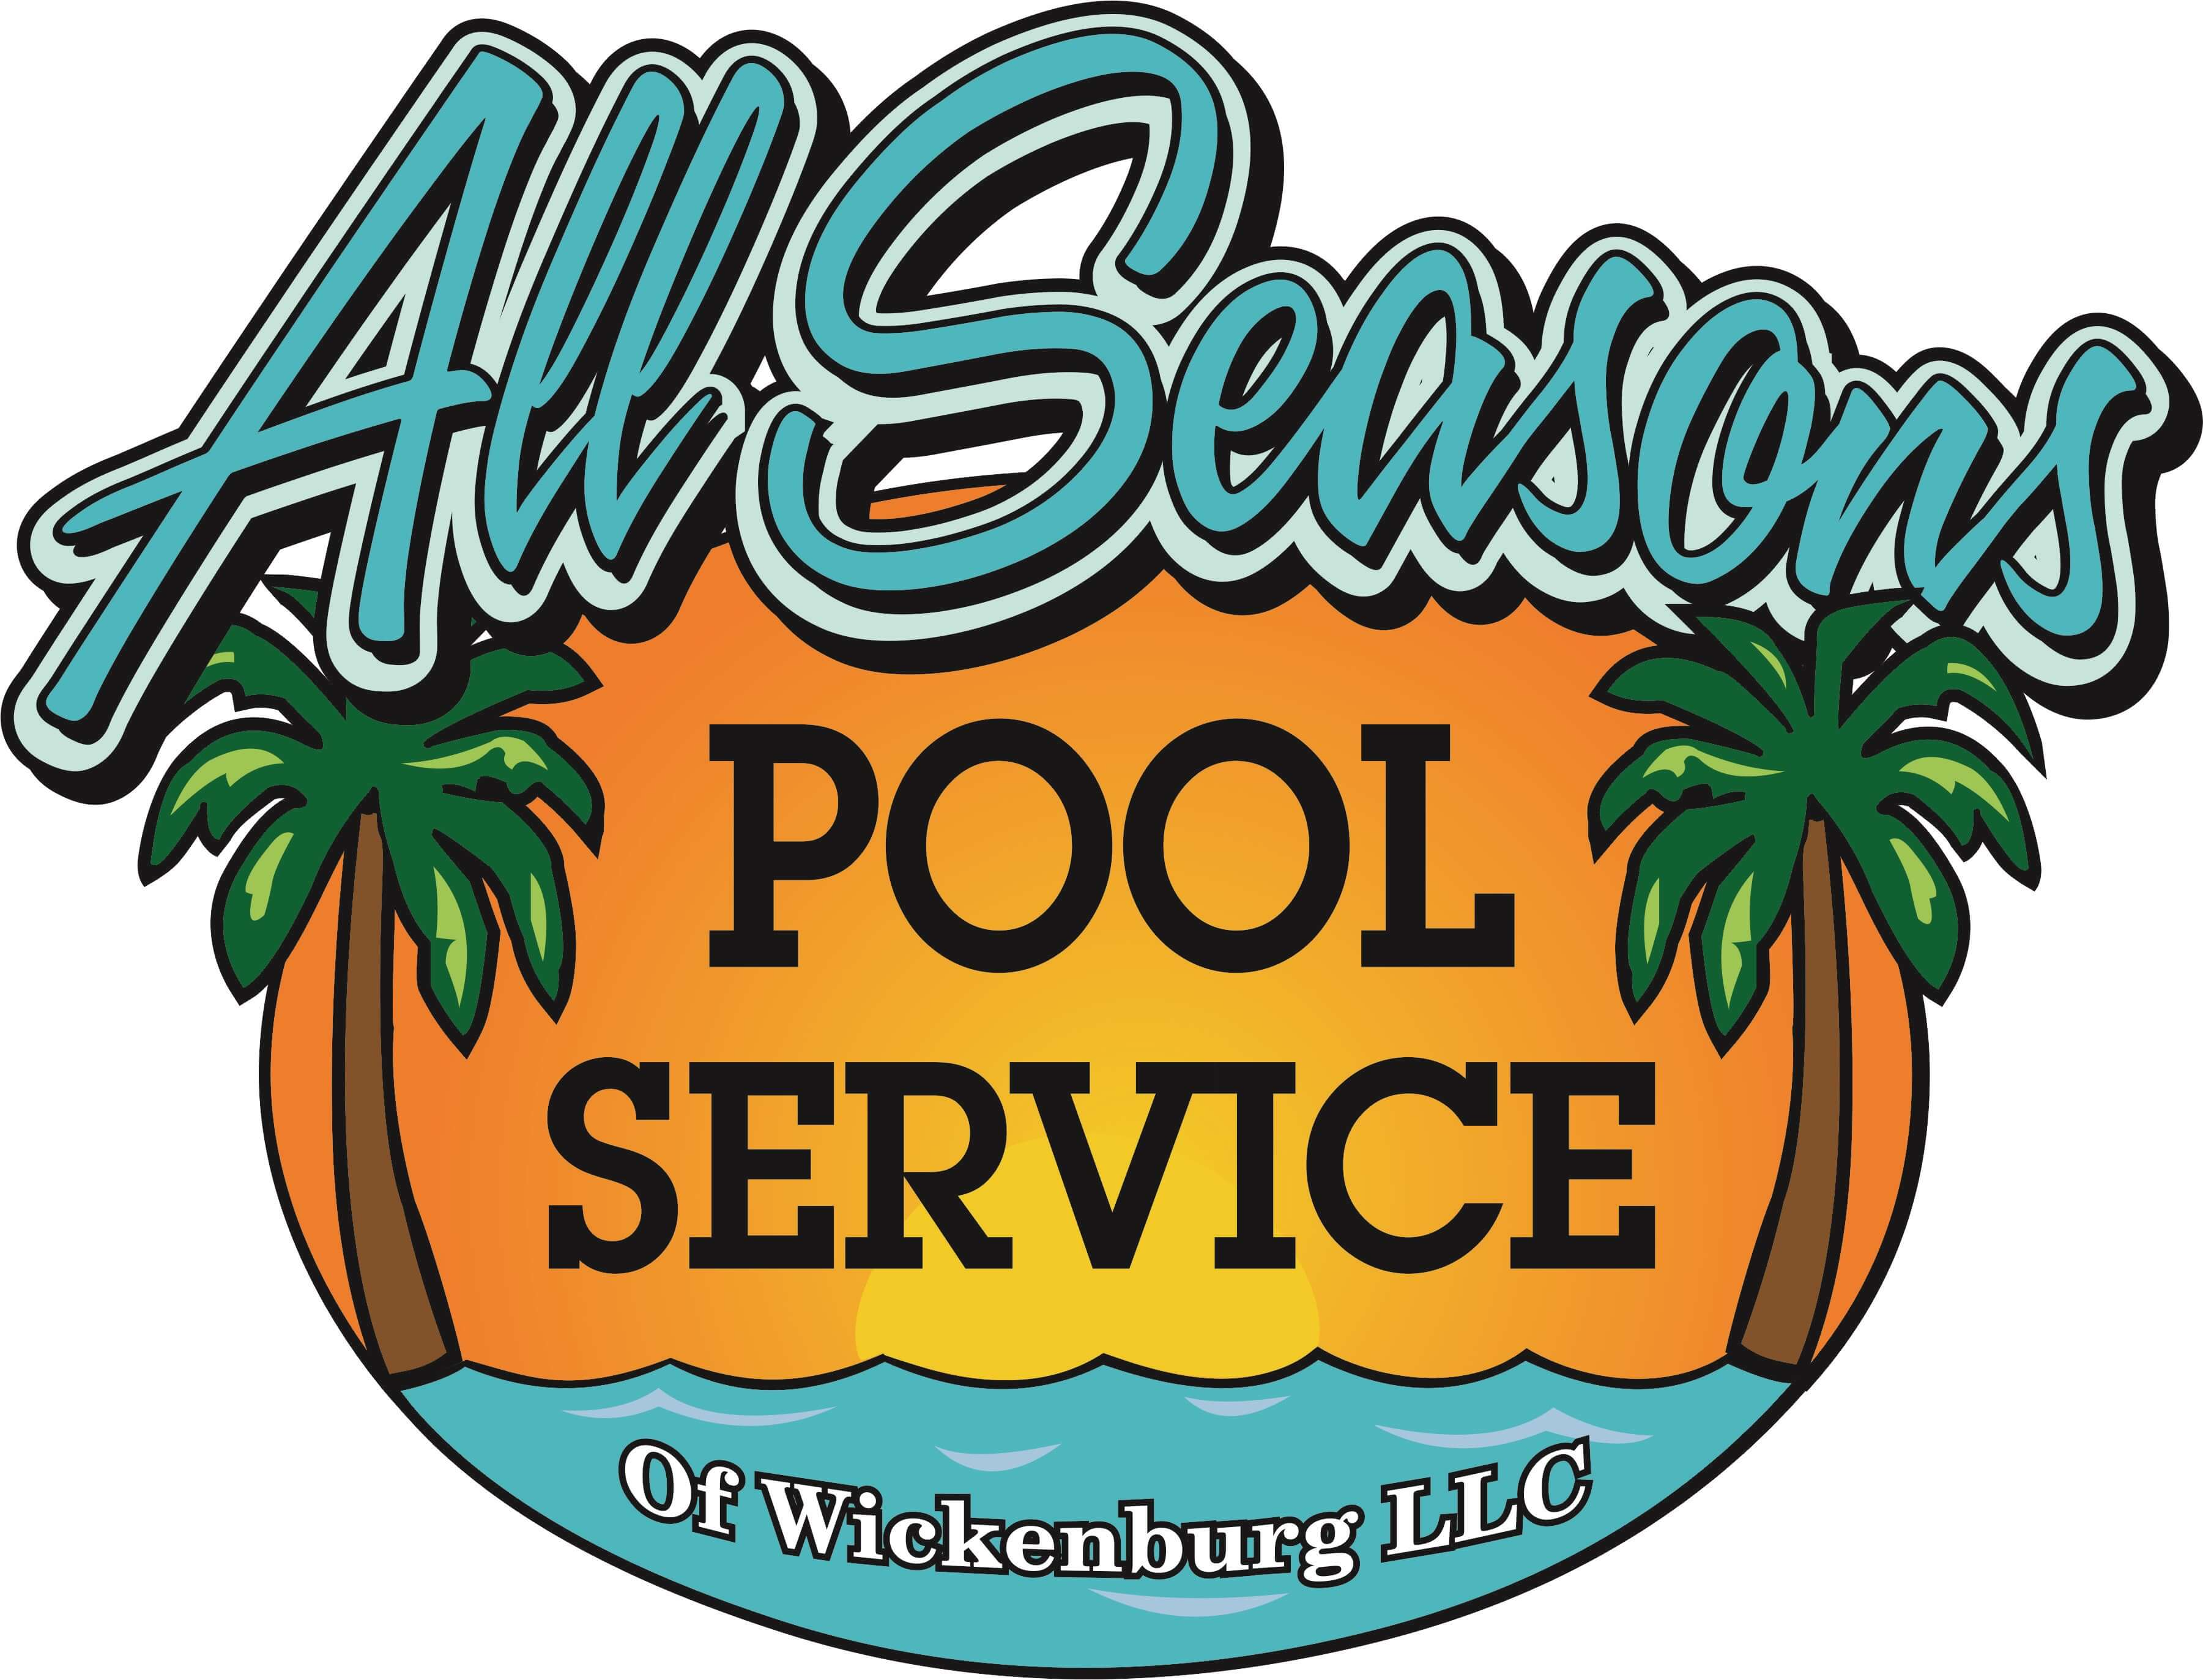 All Seasons Pool Service Logo